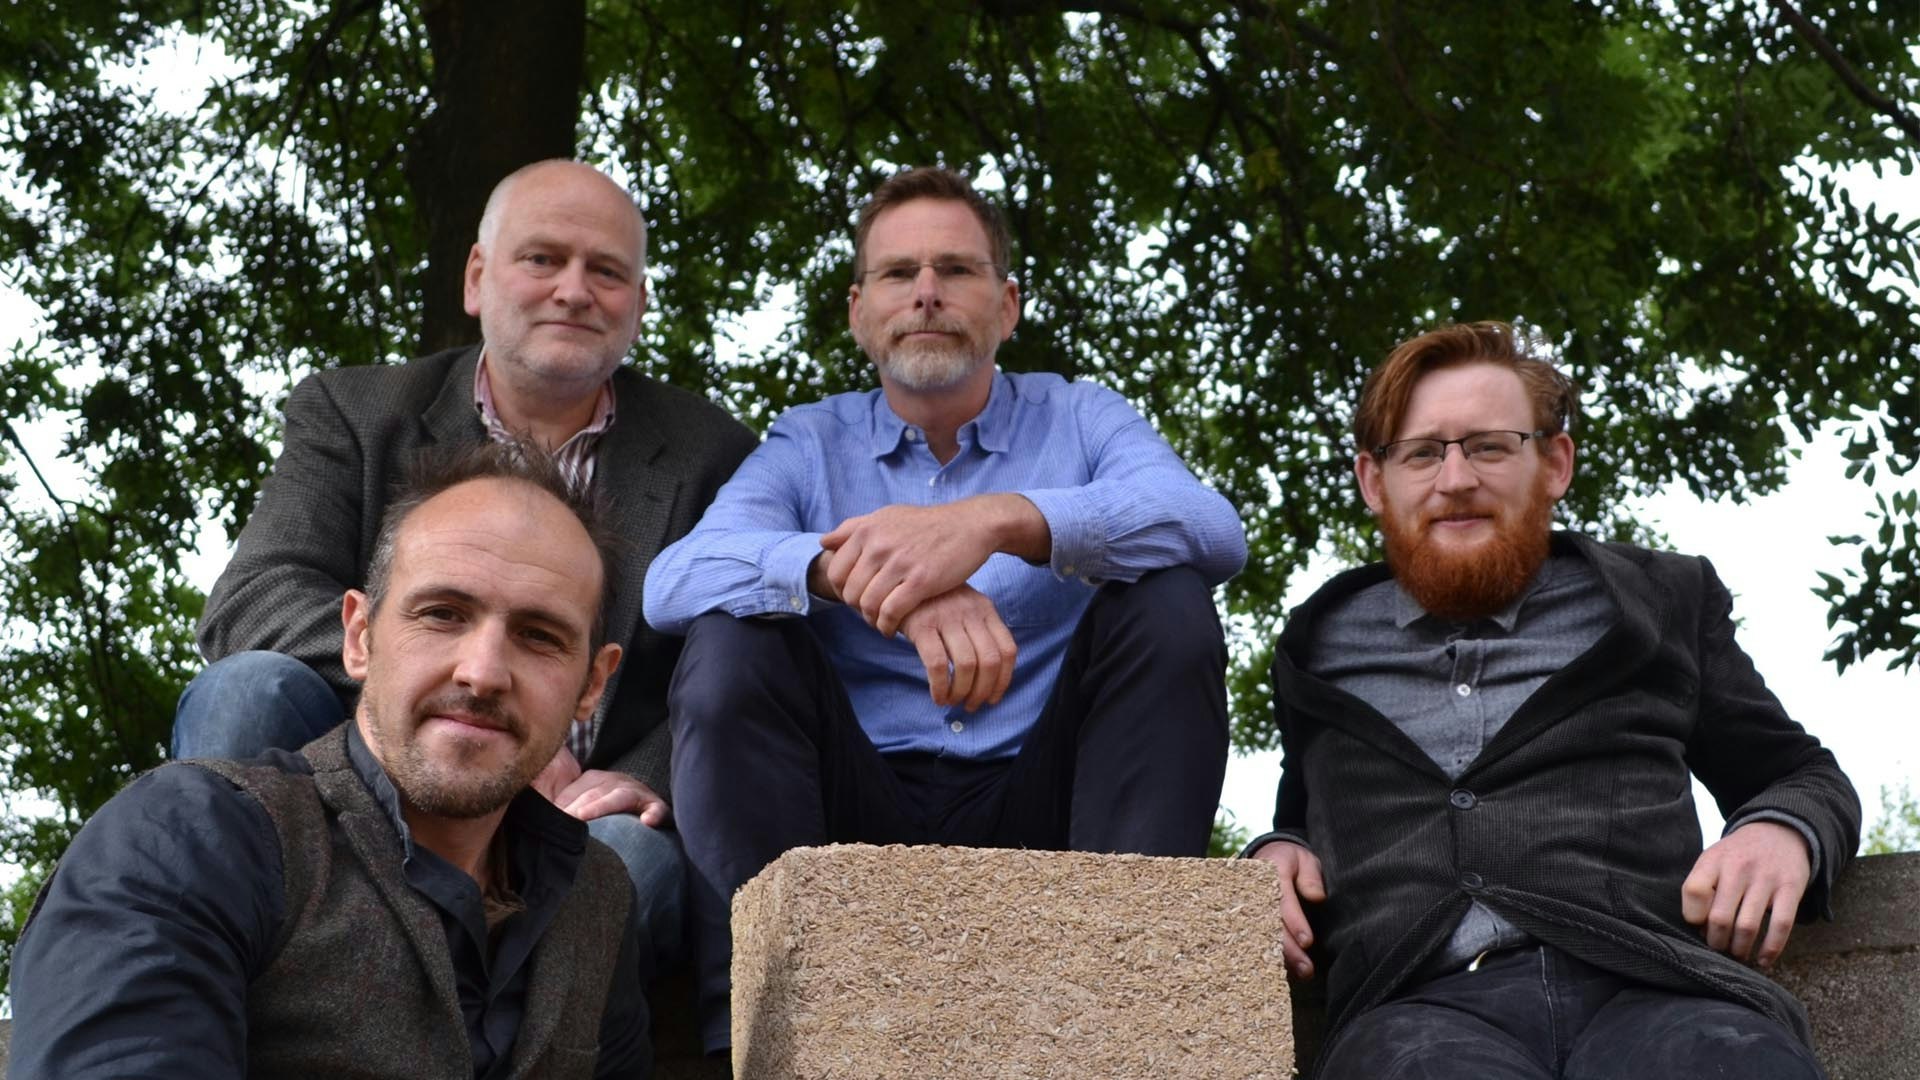 The Industrial Nature team, l-r: Sam Baumber, Ewan Mealyou, Scott Simpson, Euan Lochhead